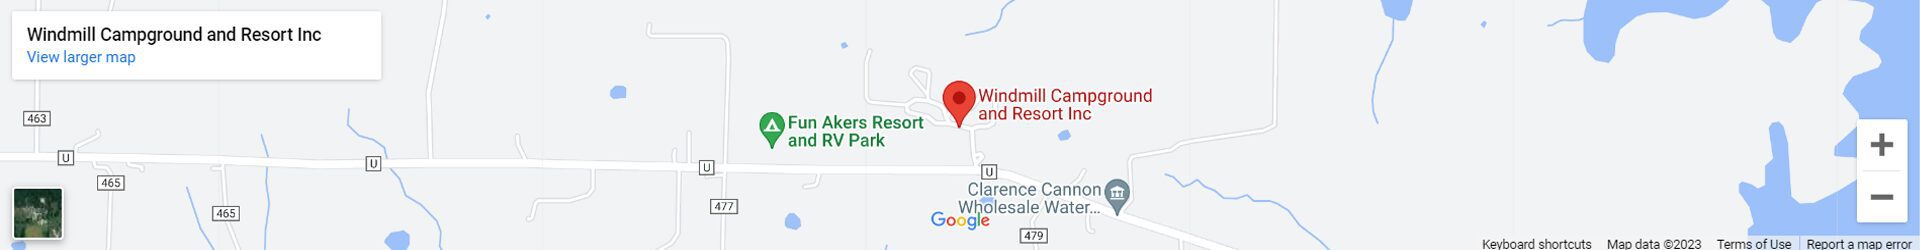 Windmill Campground & Resort Inc Map